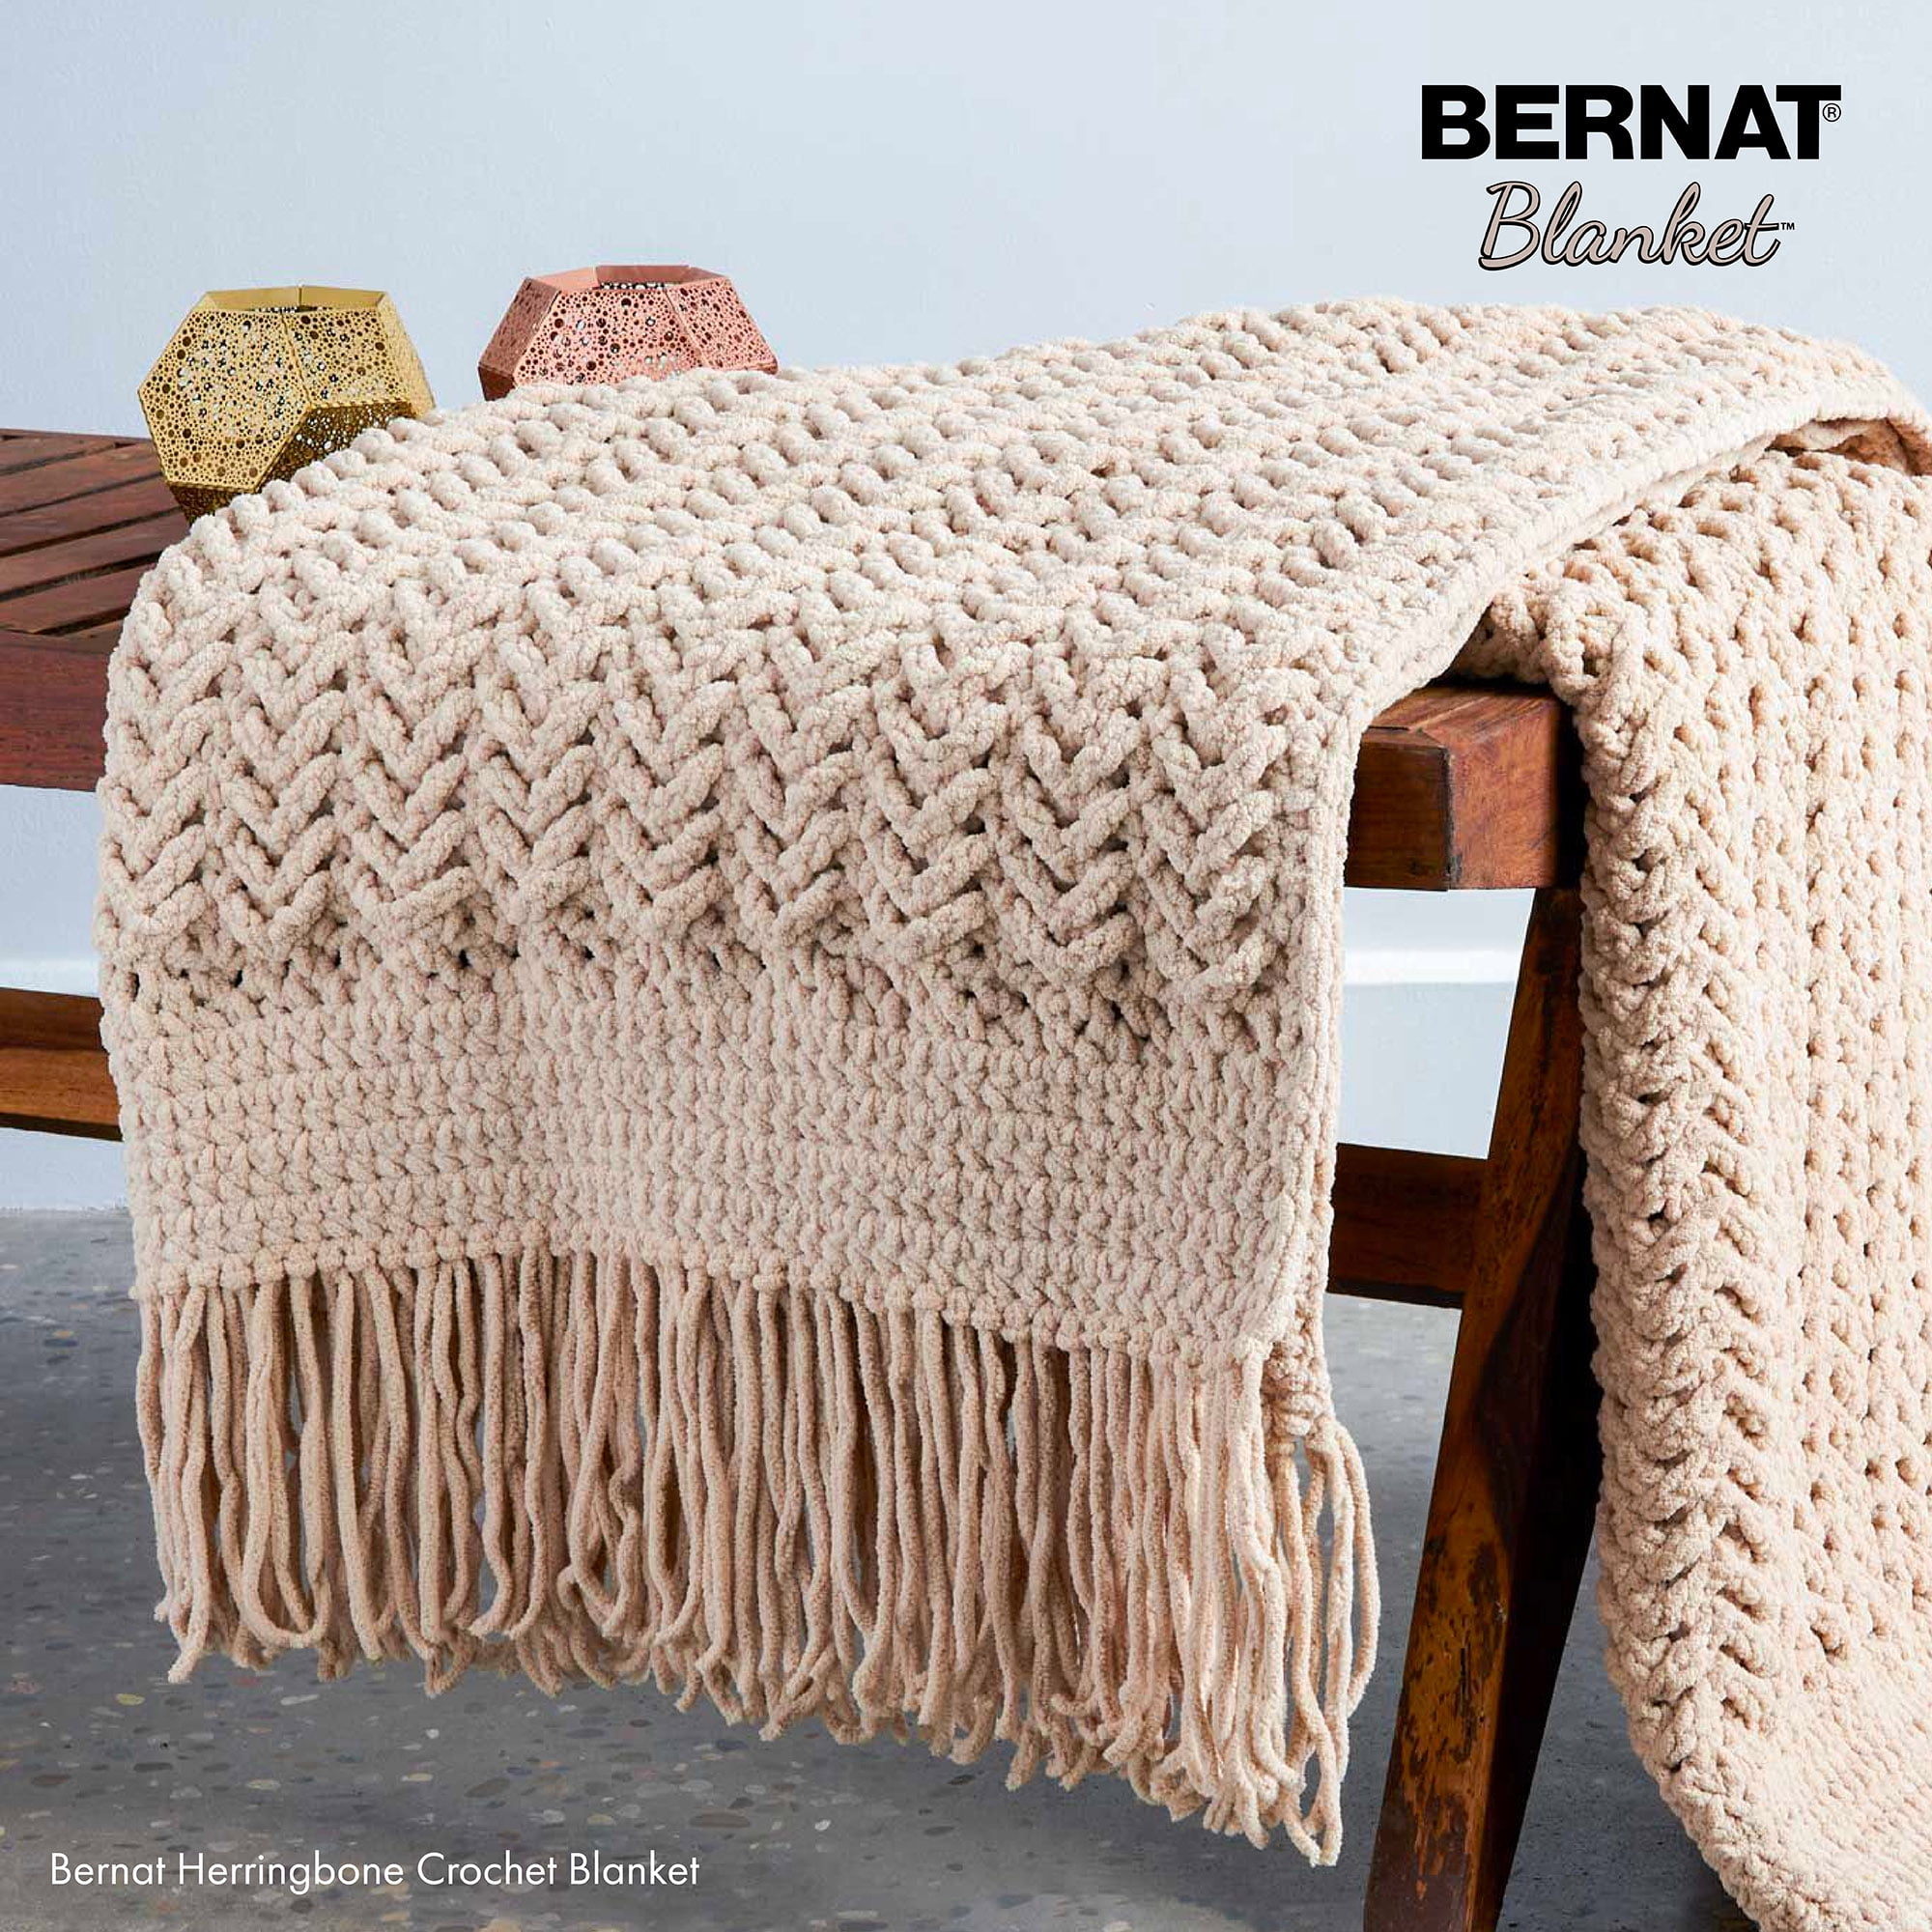 Bernat Blanket Yarn, 10.5 Ounce, Harvest, Single Ball